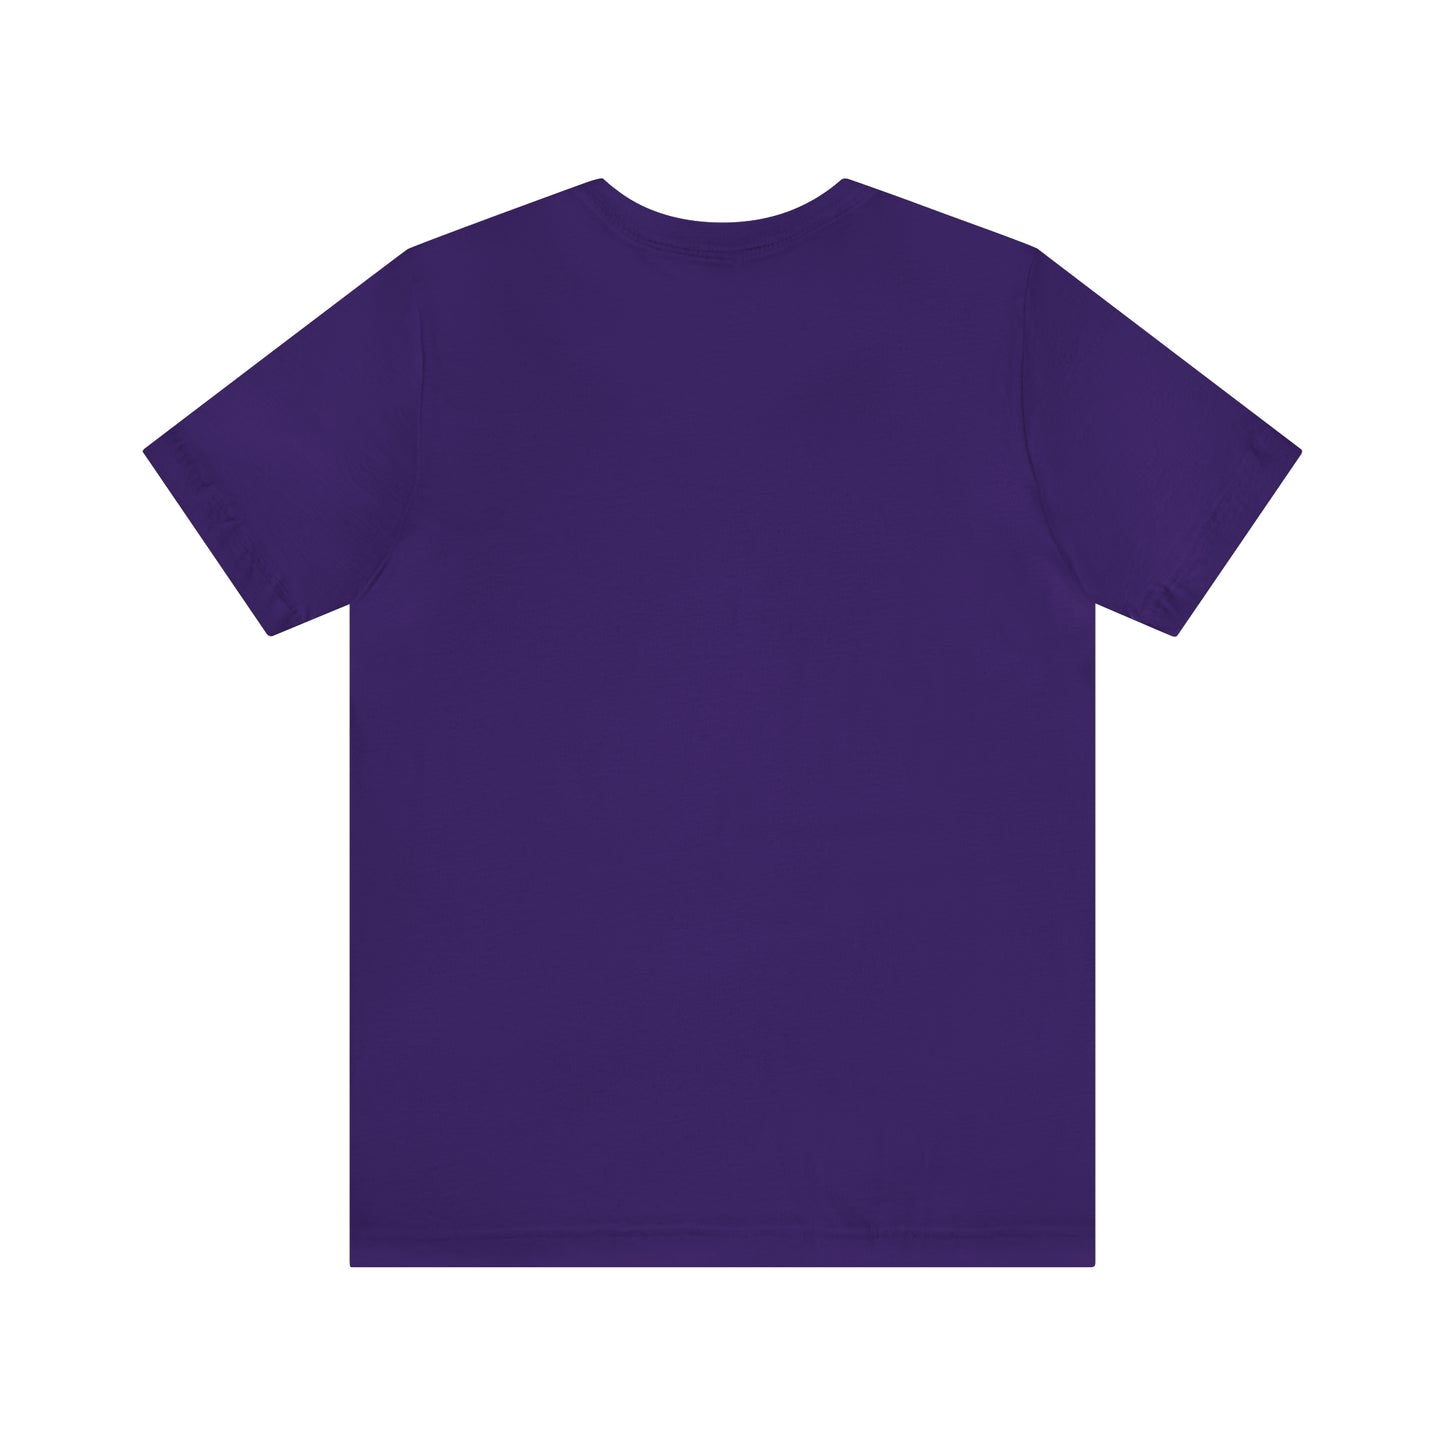 Get The Oil Team Purple Jersey Short Sleeve Tee